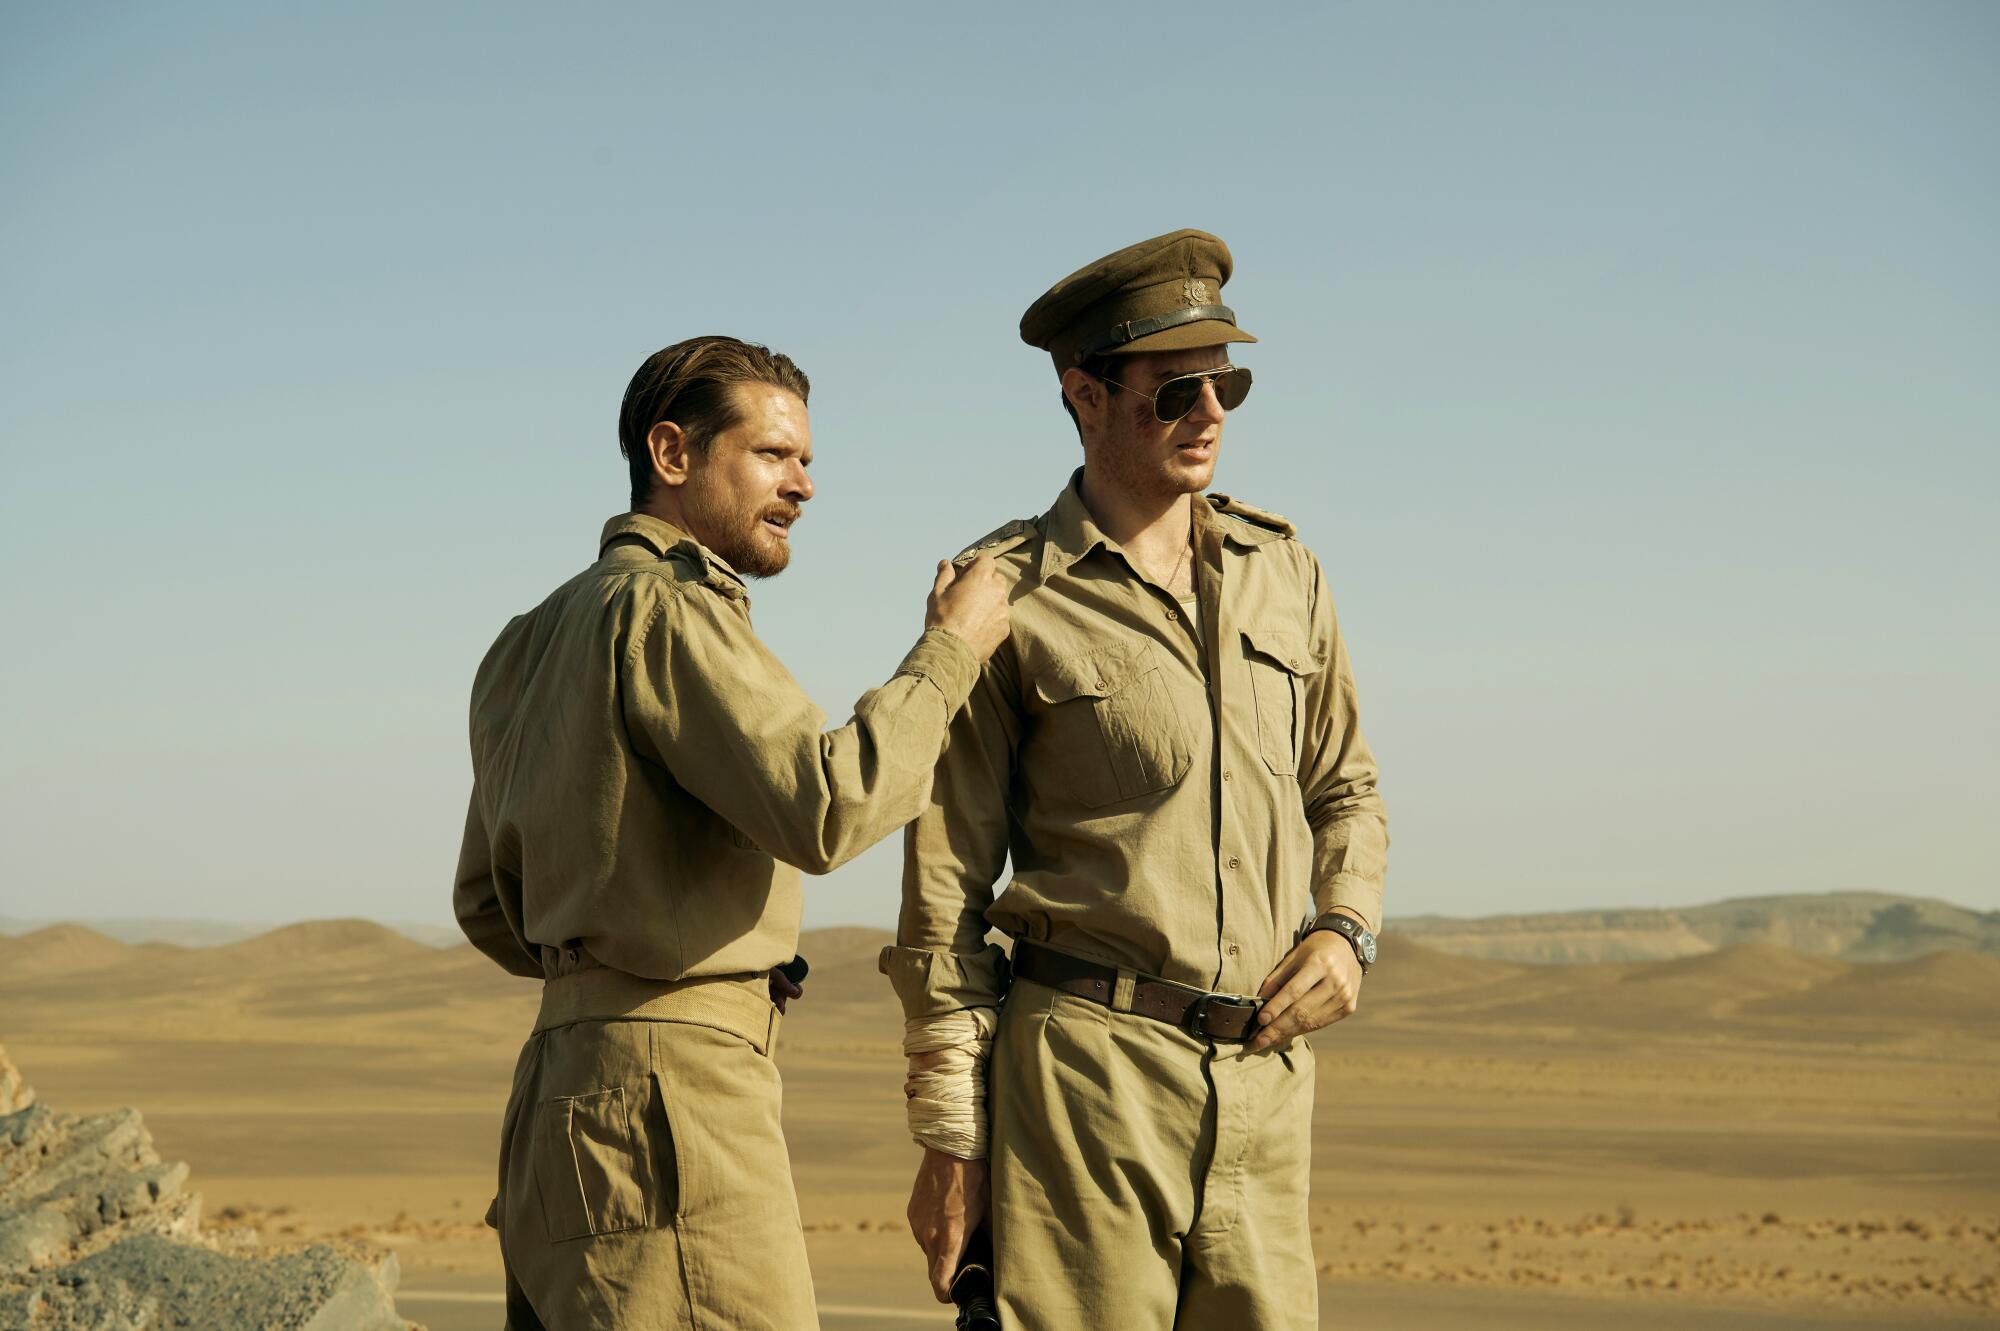 Two men in uniform confer in the open desert.